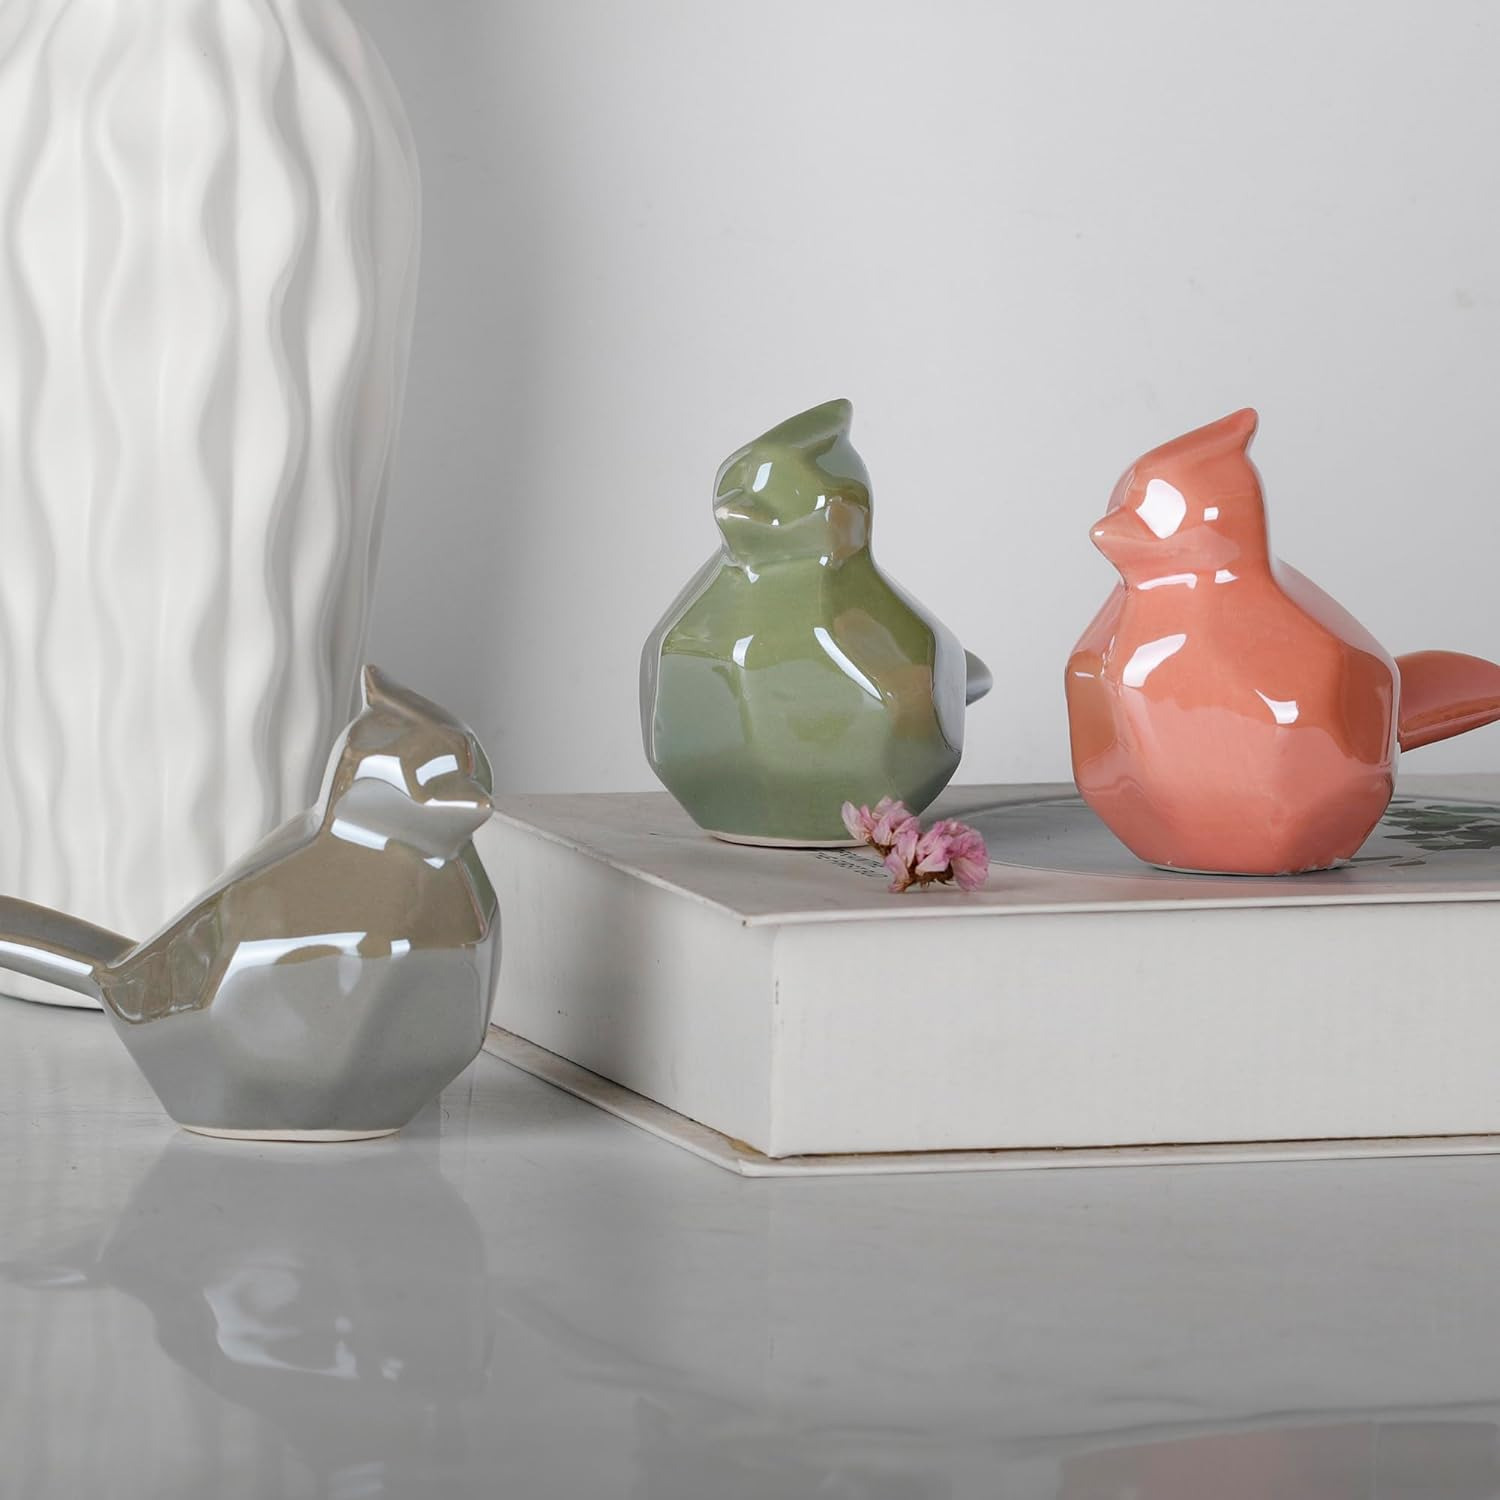 Set of 3 Ceramic Cardinal Bird Figurines Ornaments - Porcelain Bird Statue Gifts